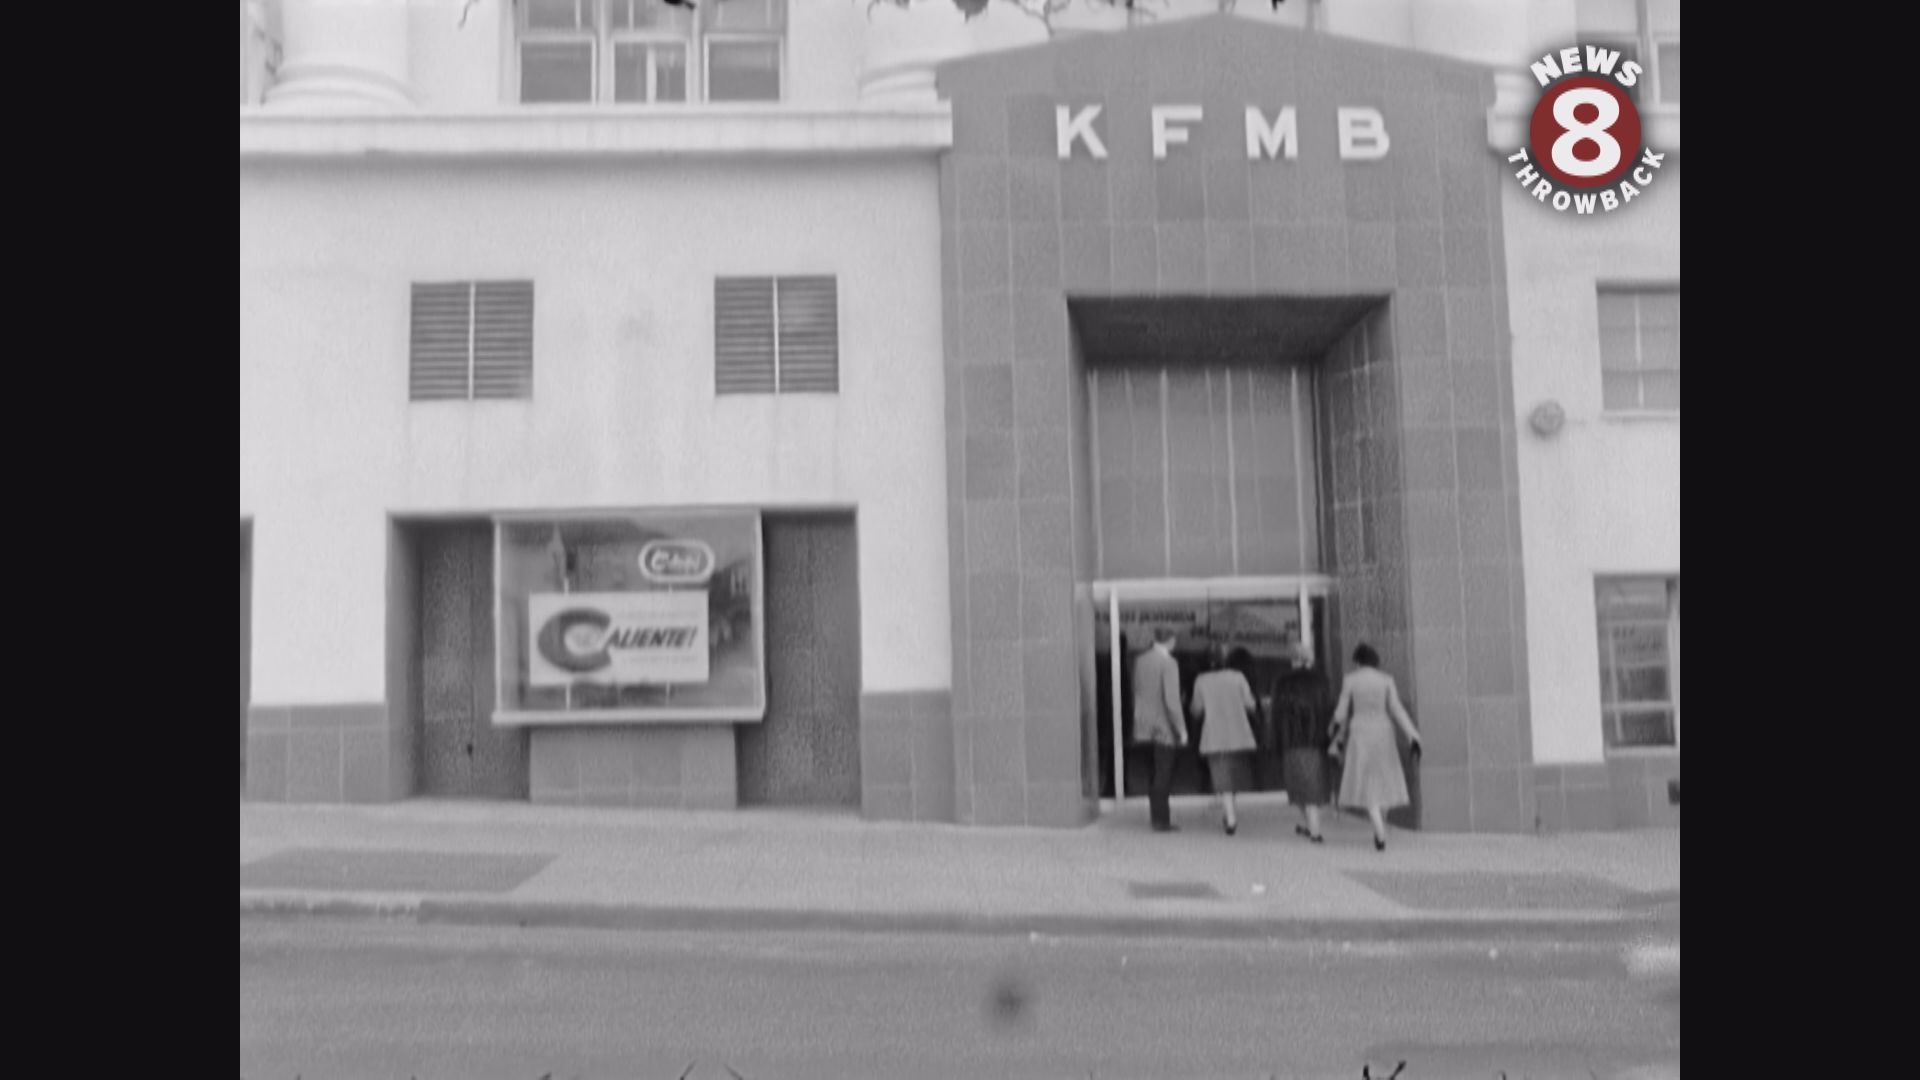 KFMB-TV 20th Anniversary in 1969